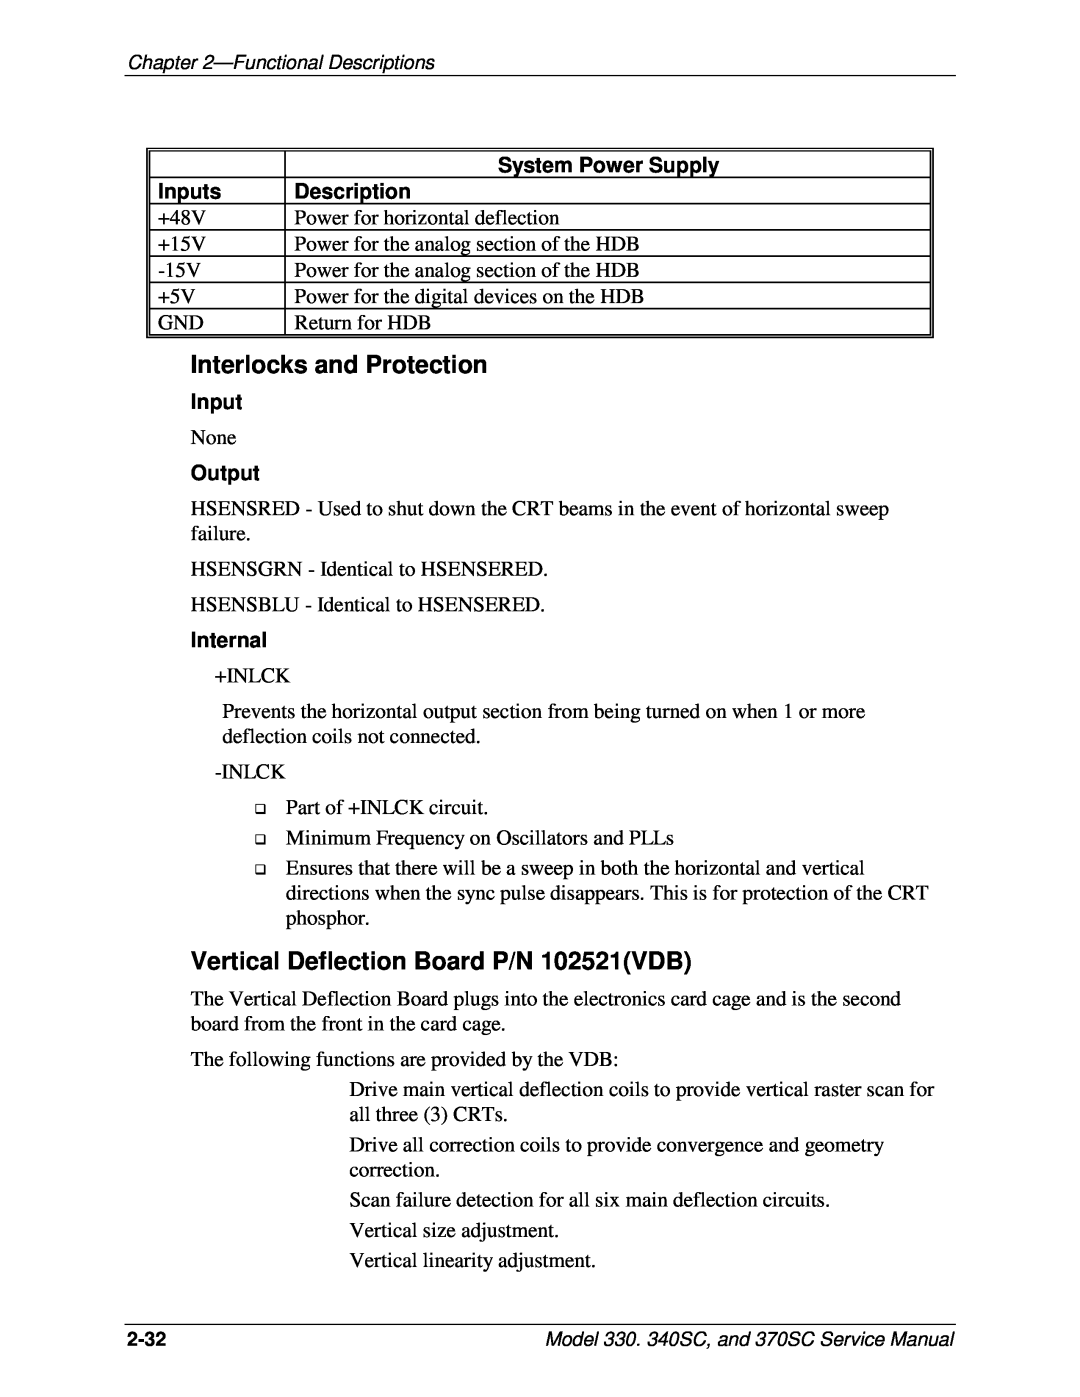 JVC 340 SC Vertical Deflection Board P/N 102521VDB, Interlocks and Protection, System Power Supply, Inputs, Description 